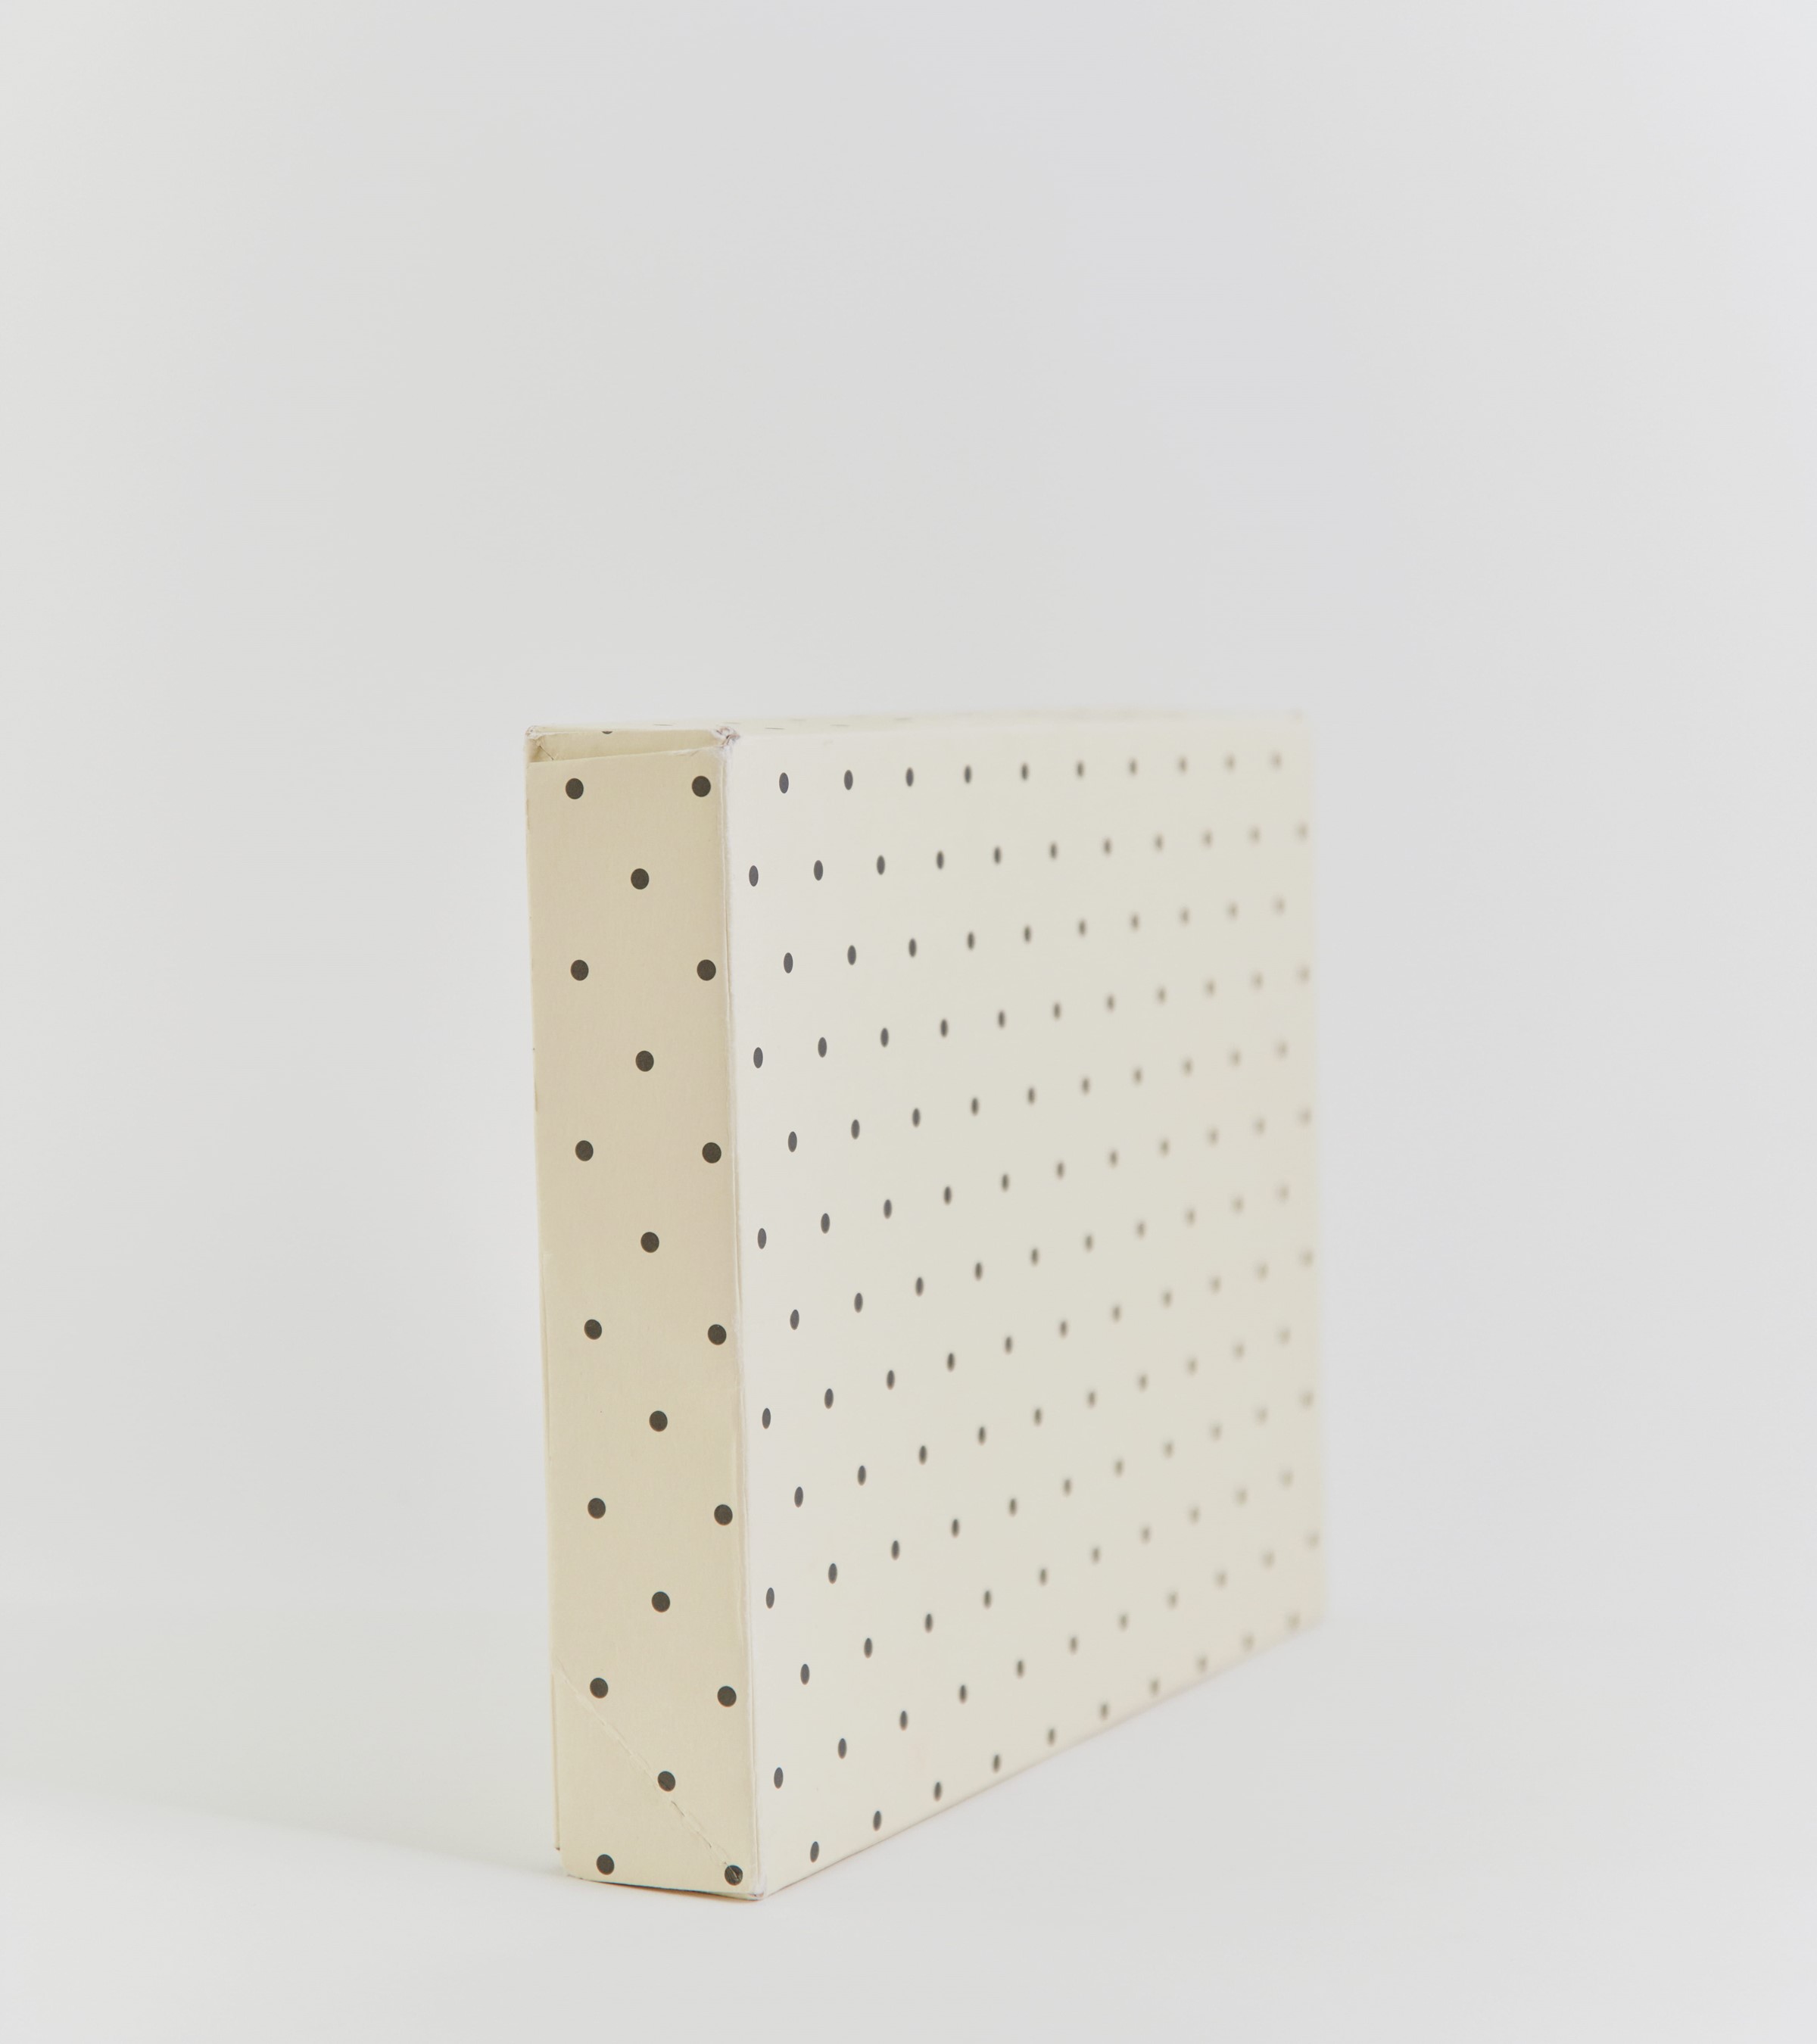 Moshi Moshi web packaging in corrugated cardboard